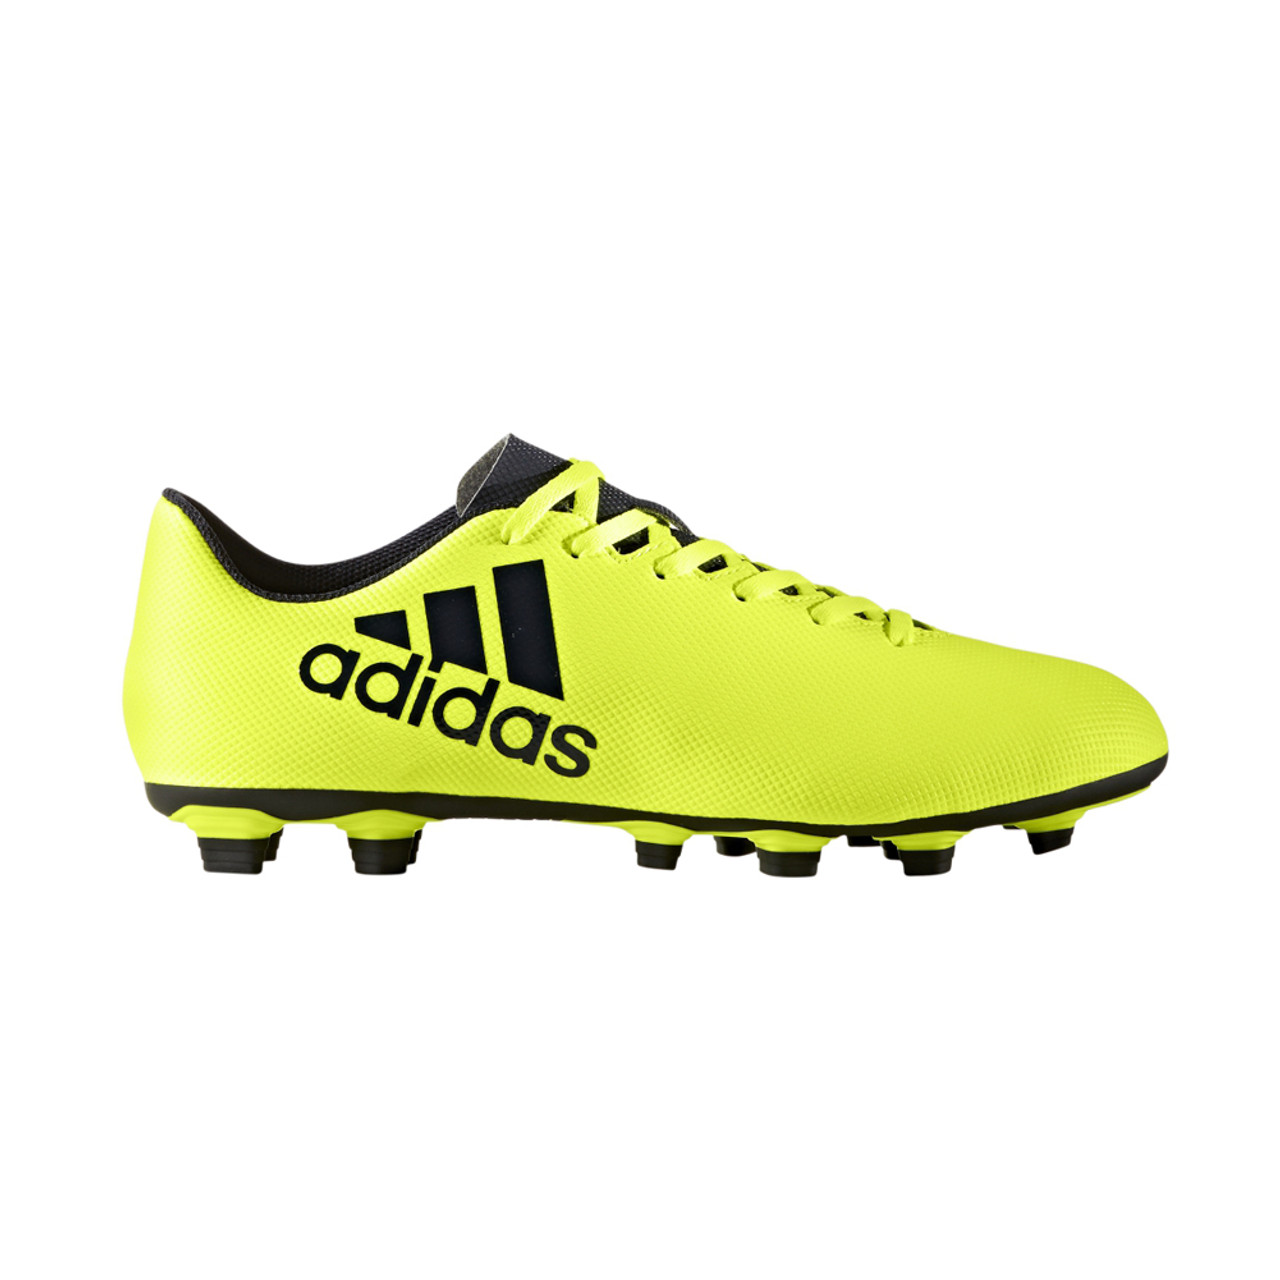 Adidas Men's X 17.4 FxG Soccer Cleat - Yellow | Discount Men's Athletic Shoes More - Shoolu.com | Shoolu.com